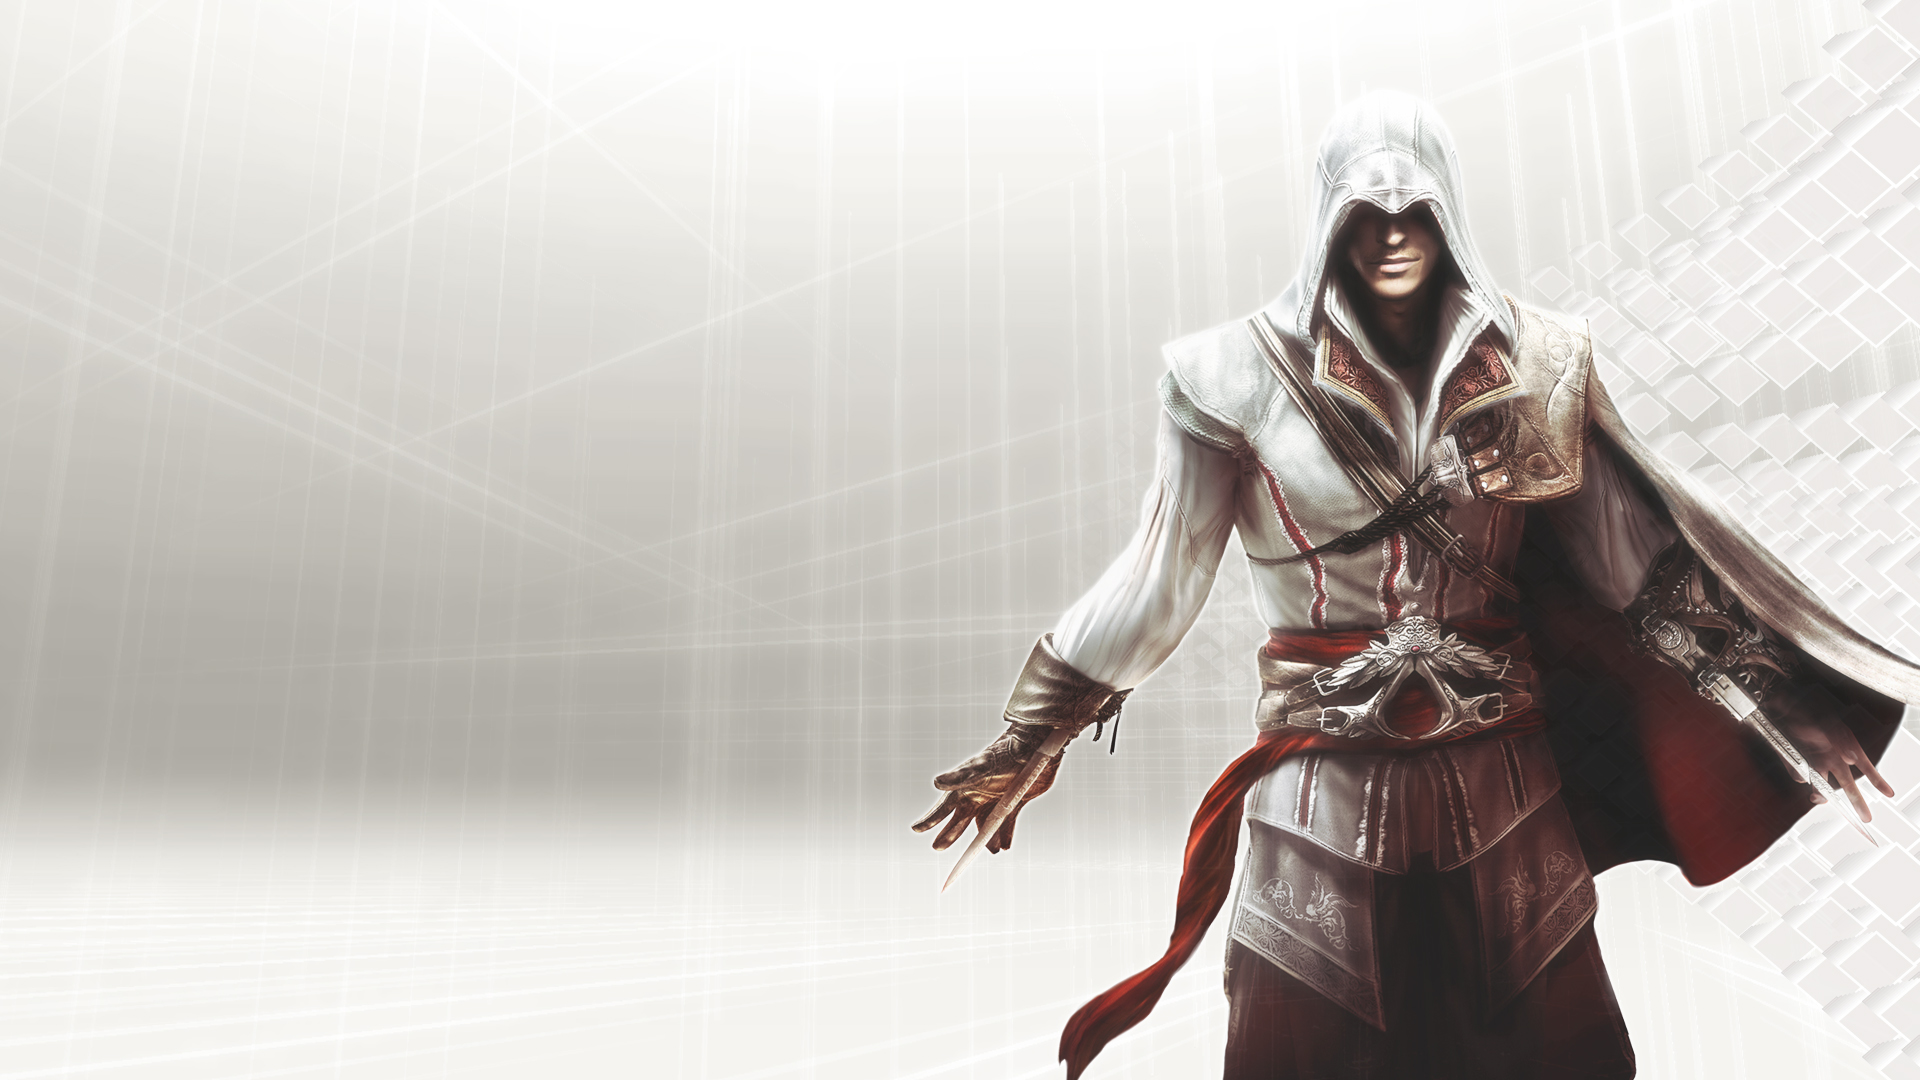 40+] Assassin's Creed Brotherhood Wallpaper HD - WallpaperSafari